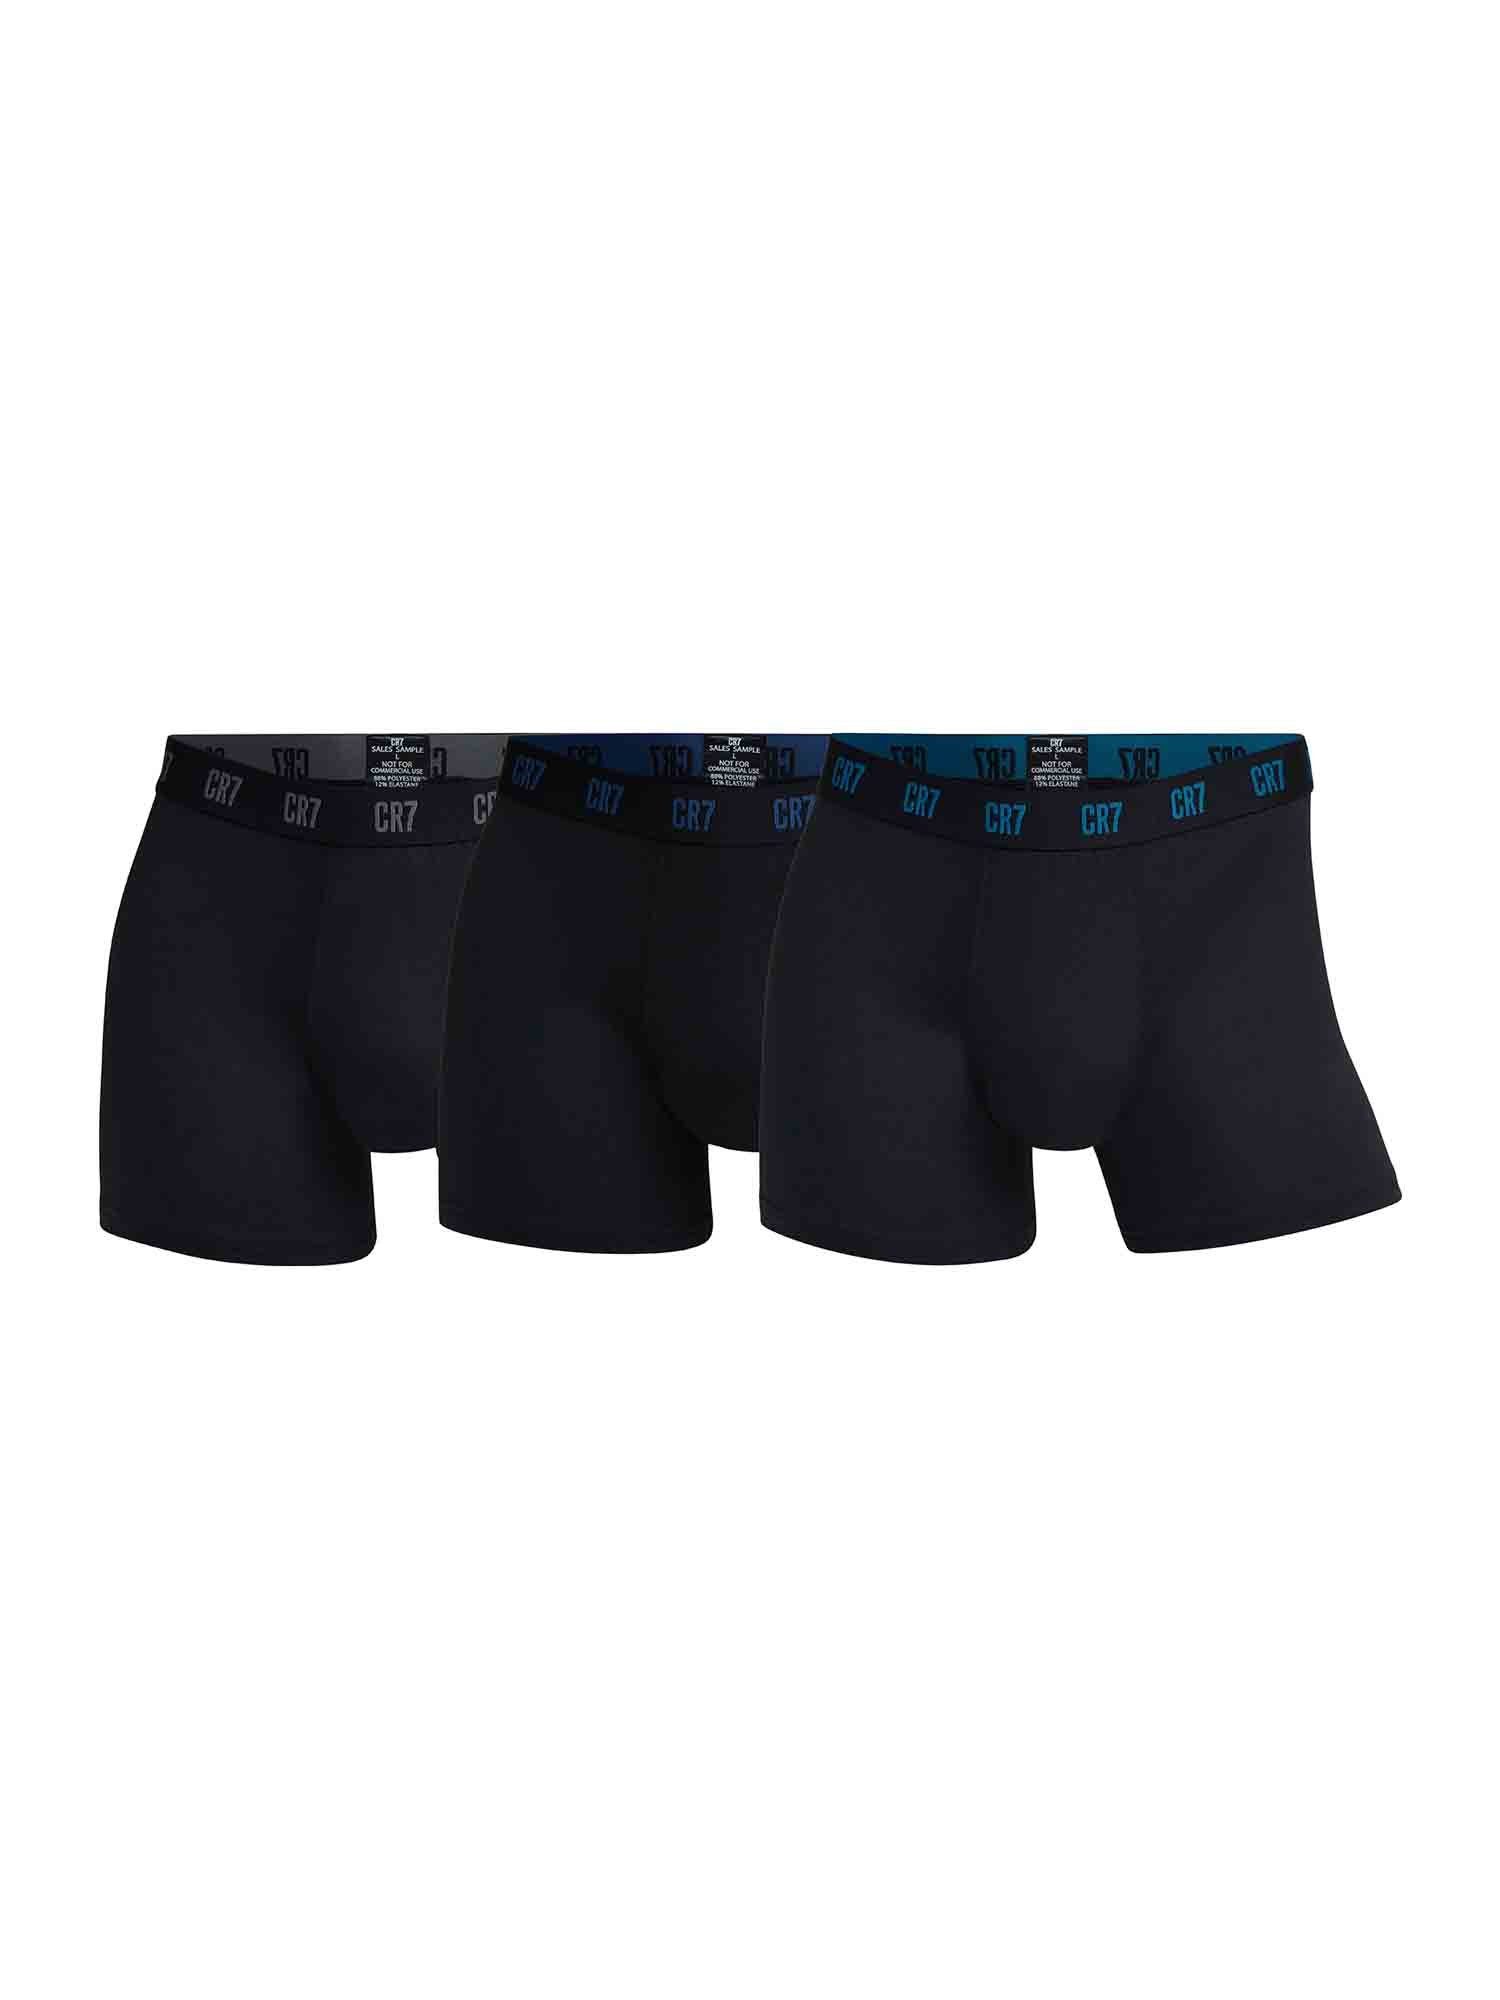 Herren Multipack Boxershorts Retro Multi Pants Pants Trunks (3-St) Männer CR7 Retro 18